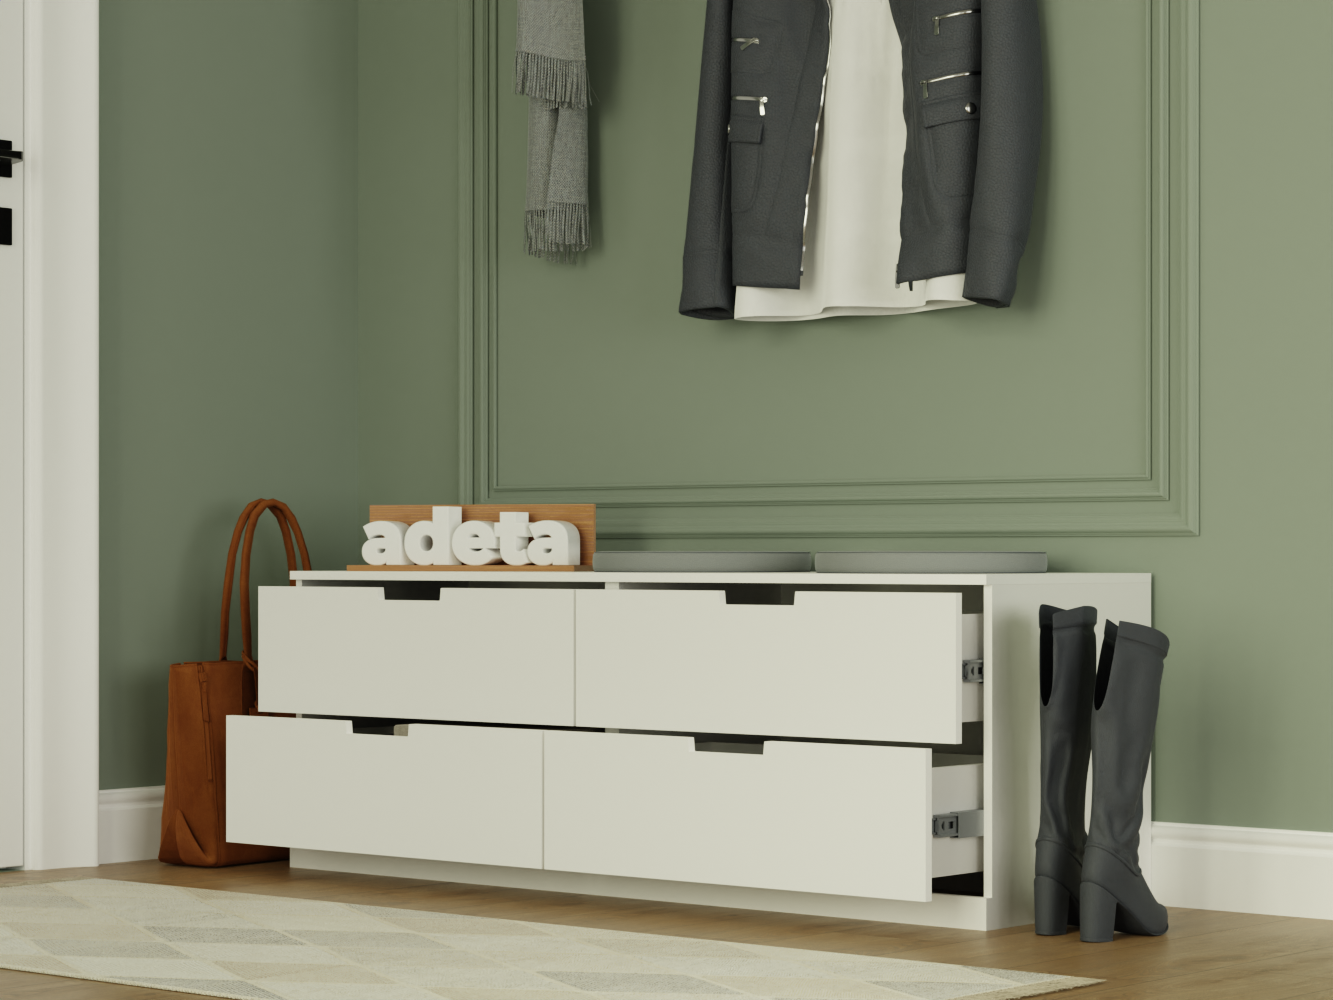 Изображение товара Комод Нордли 22 white ИКЕА (IKEA), 160x45x54 см на сайте adeta.ru